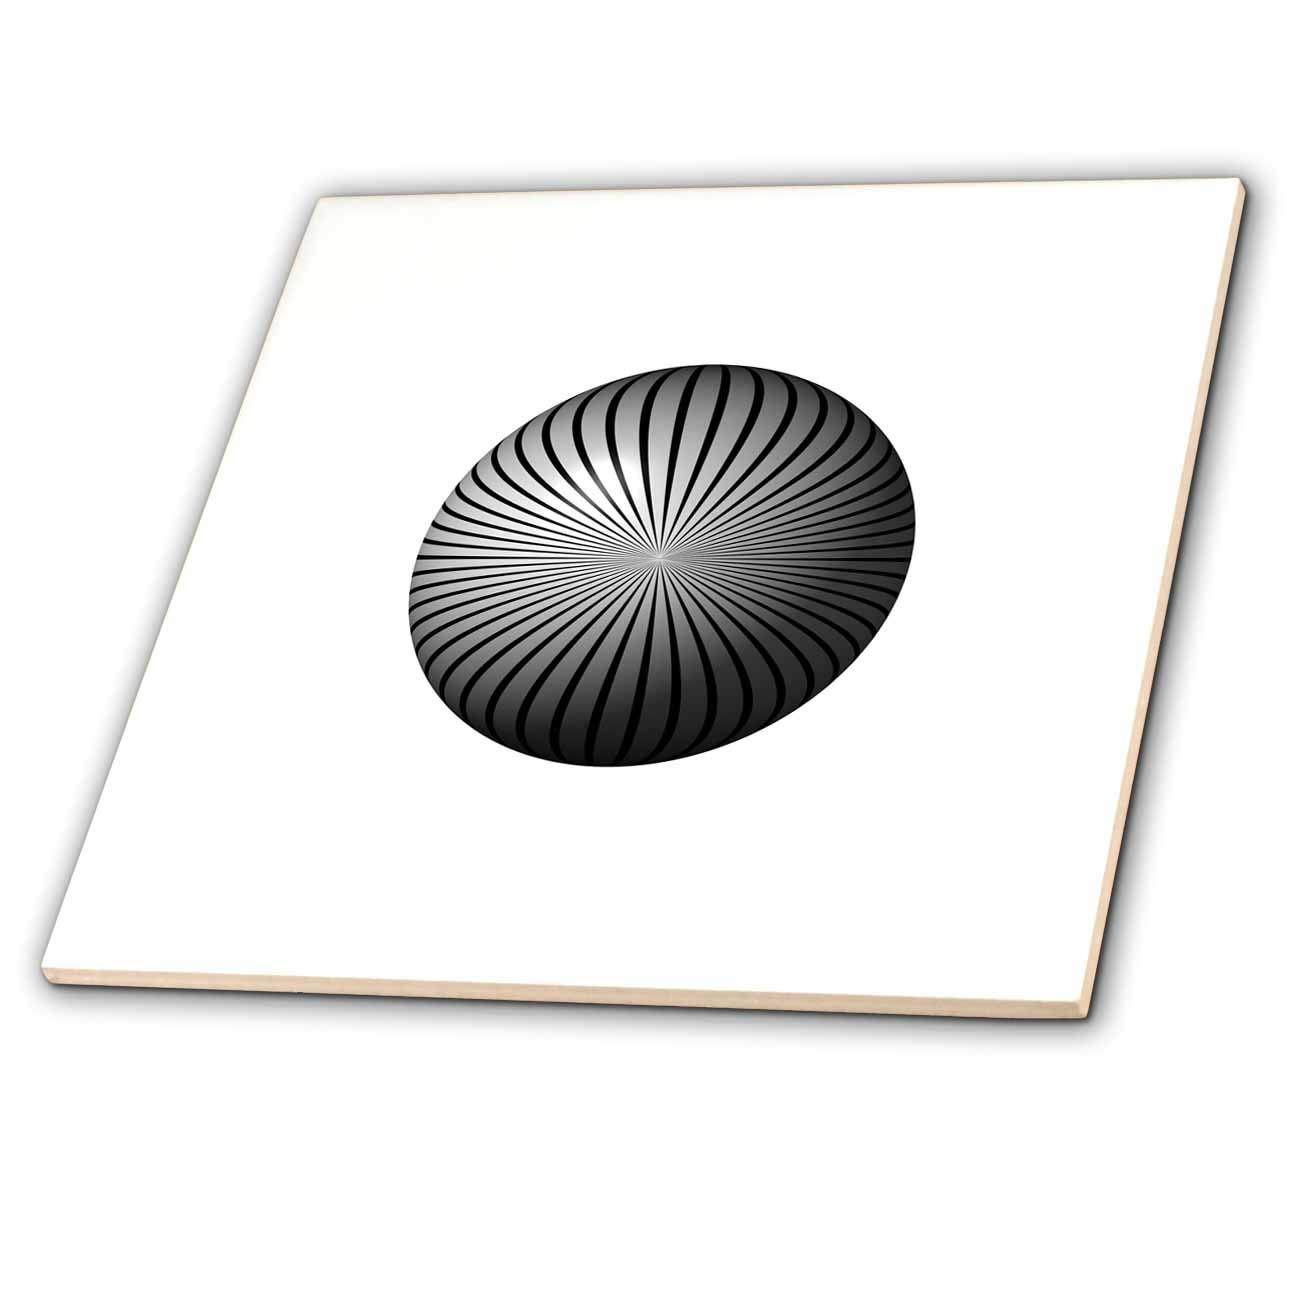 Tile Globe Logo - Amazon.com: 3dRose Henrik Lehnerer Designs - Illustrations - Black ...